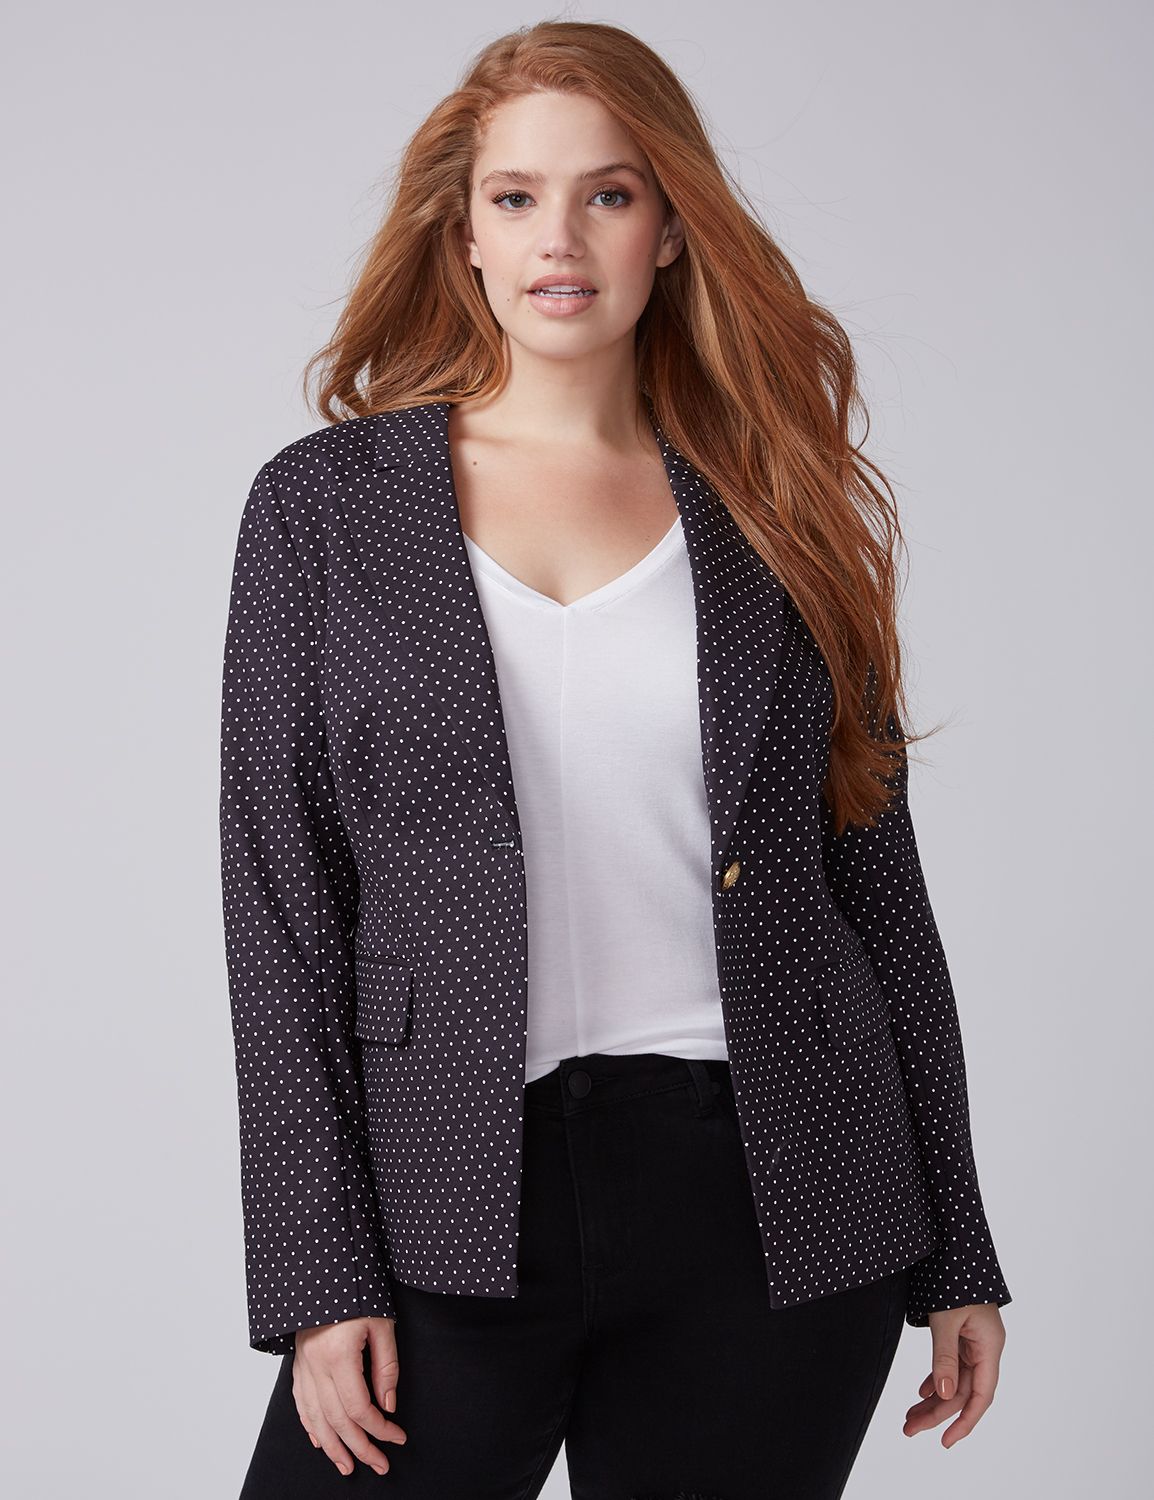 Women's Plus Size Moto Jackets, Blazers & Coats | Plus Size Jackets ...